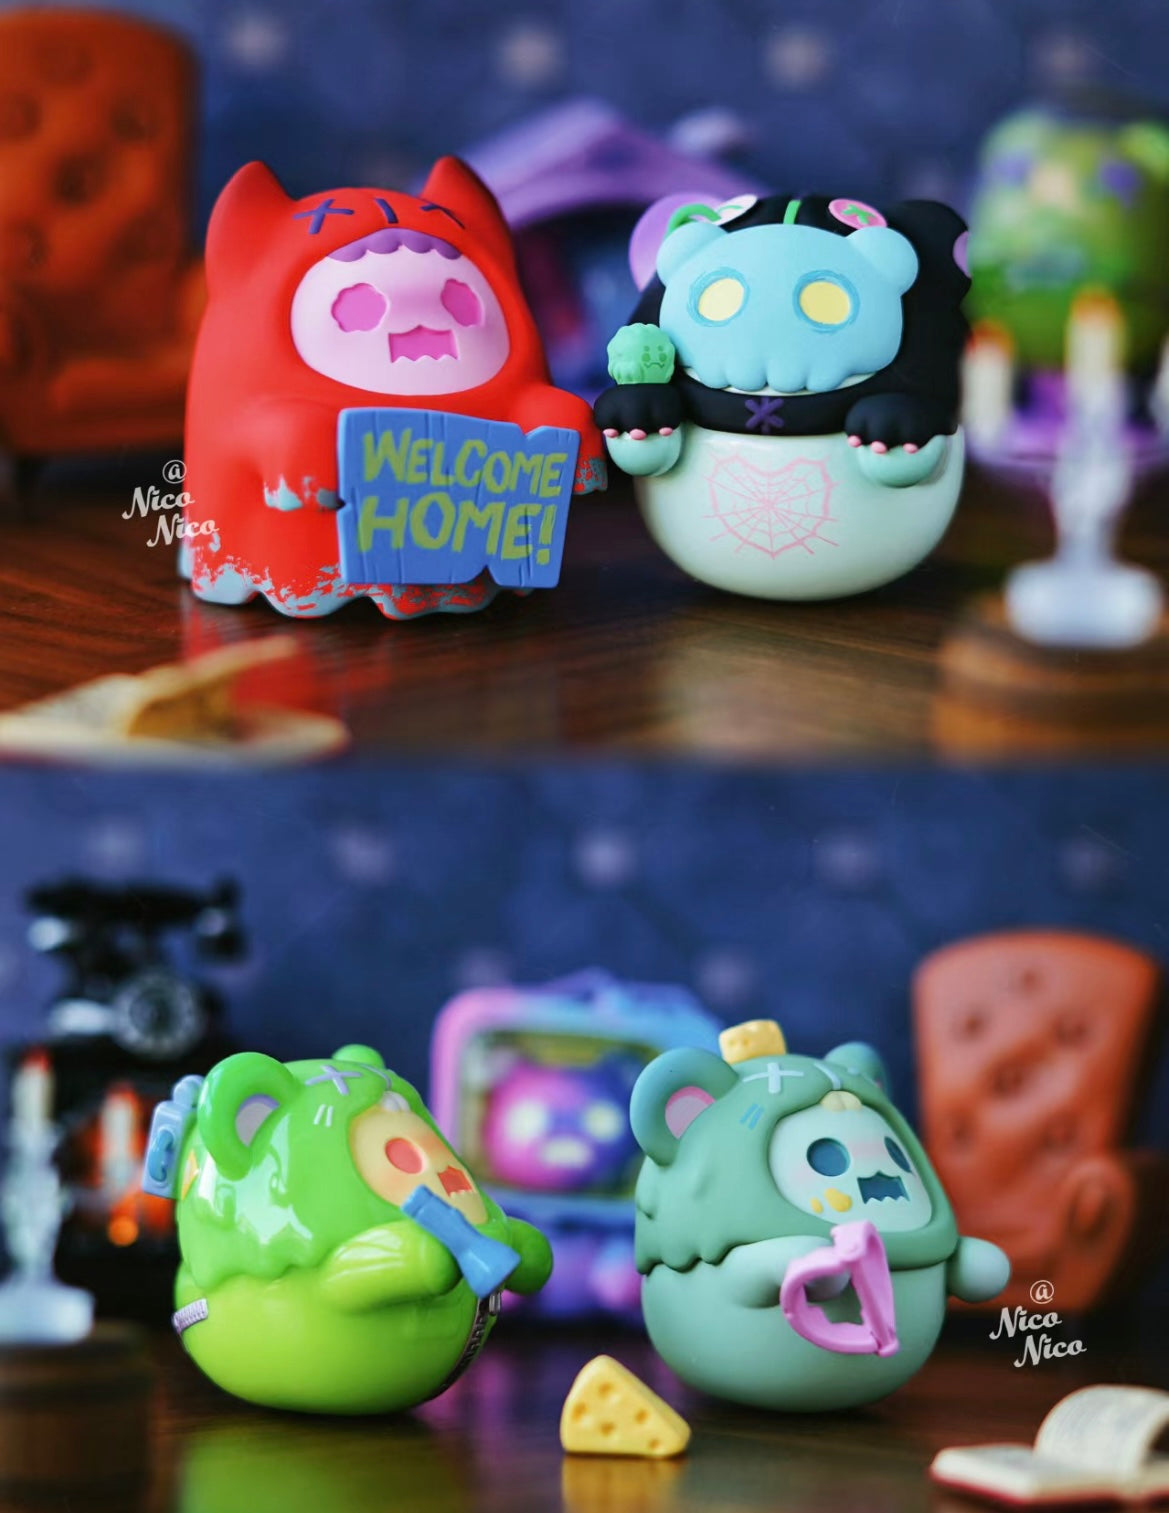 Shinwoo ghost bear house toy doll